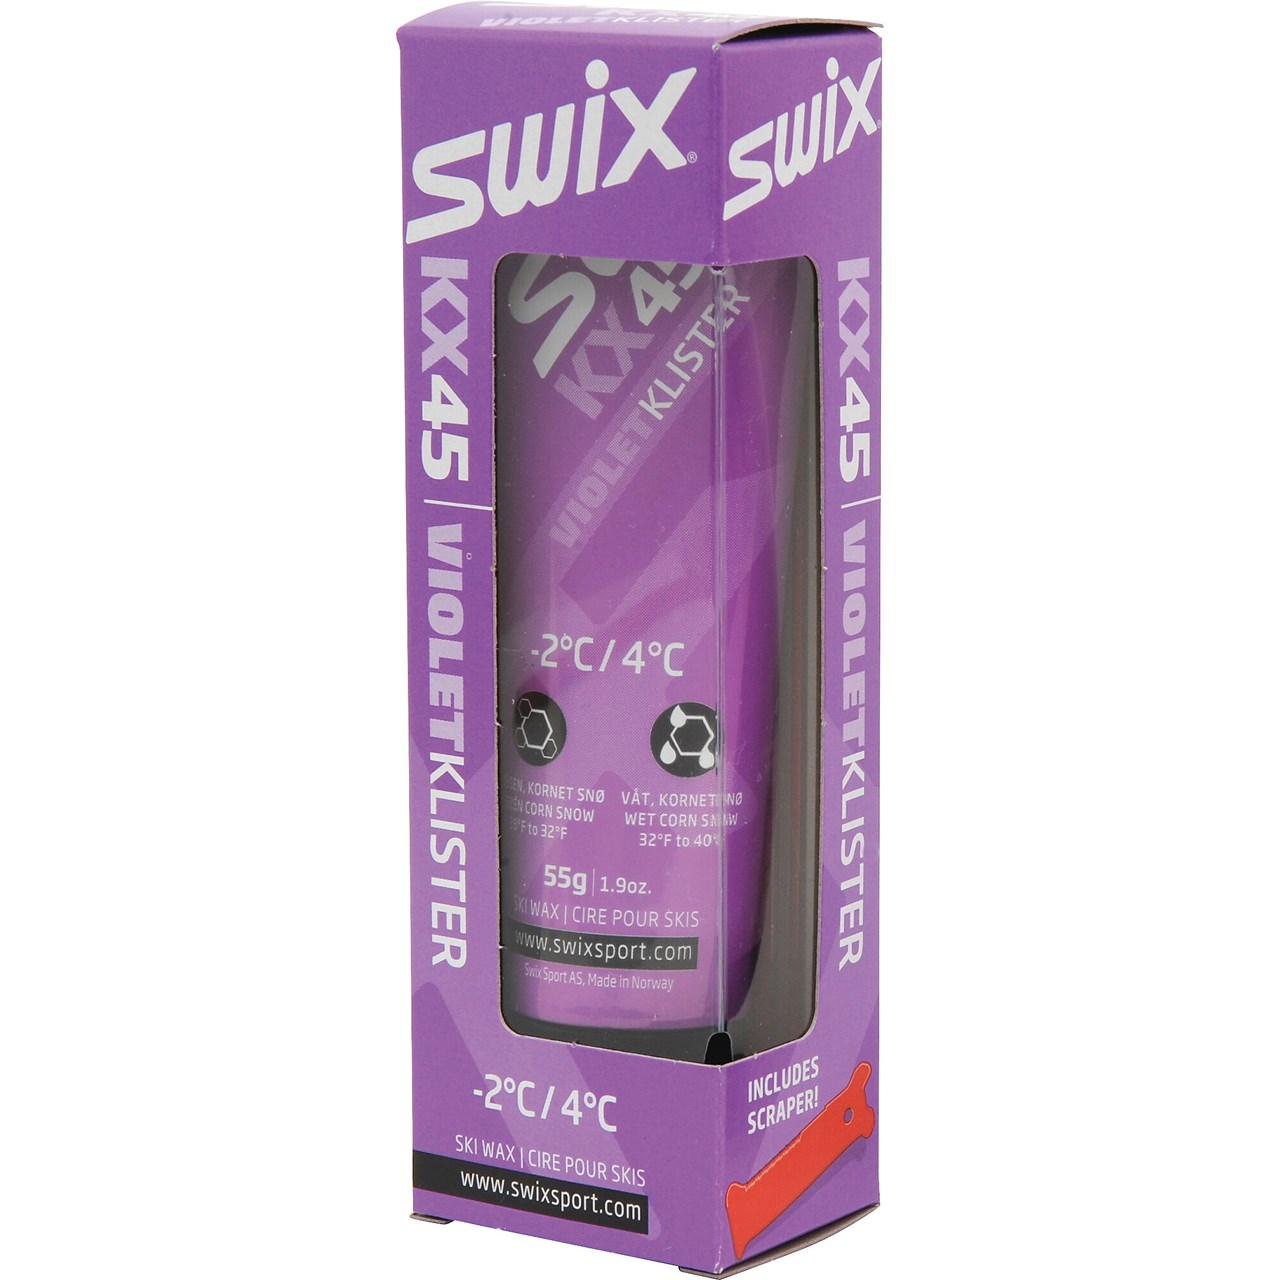 Swix klister KX45 -2/4 grader